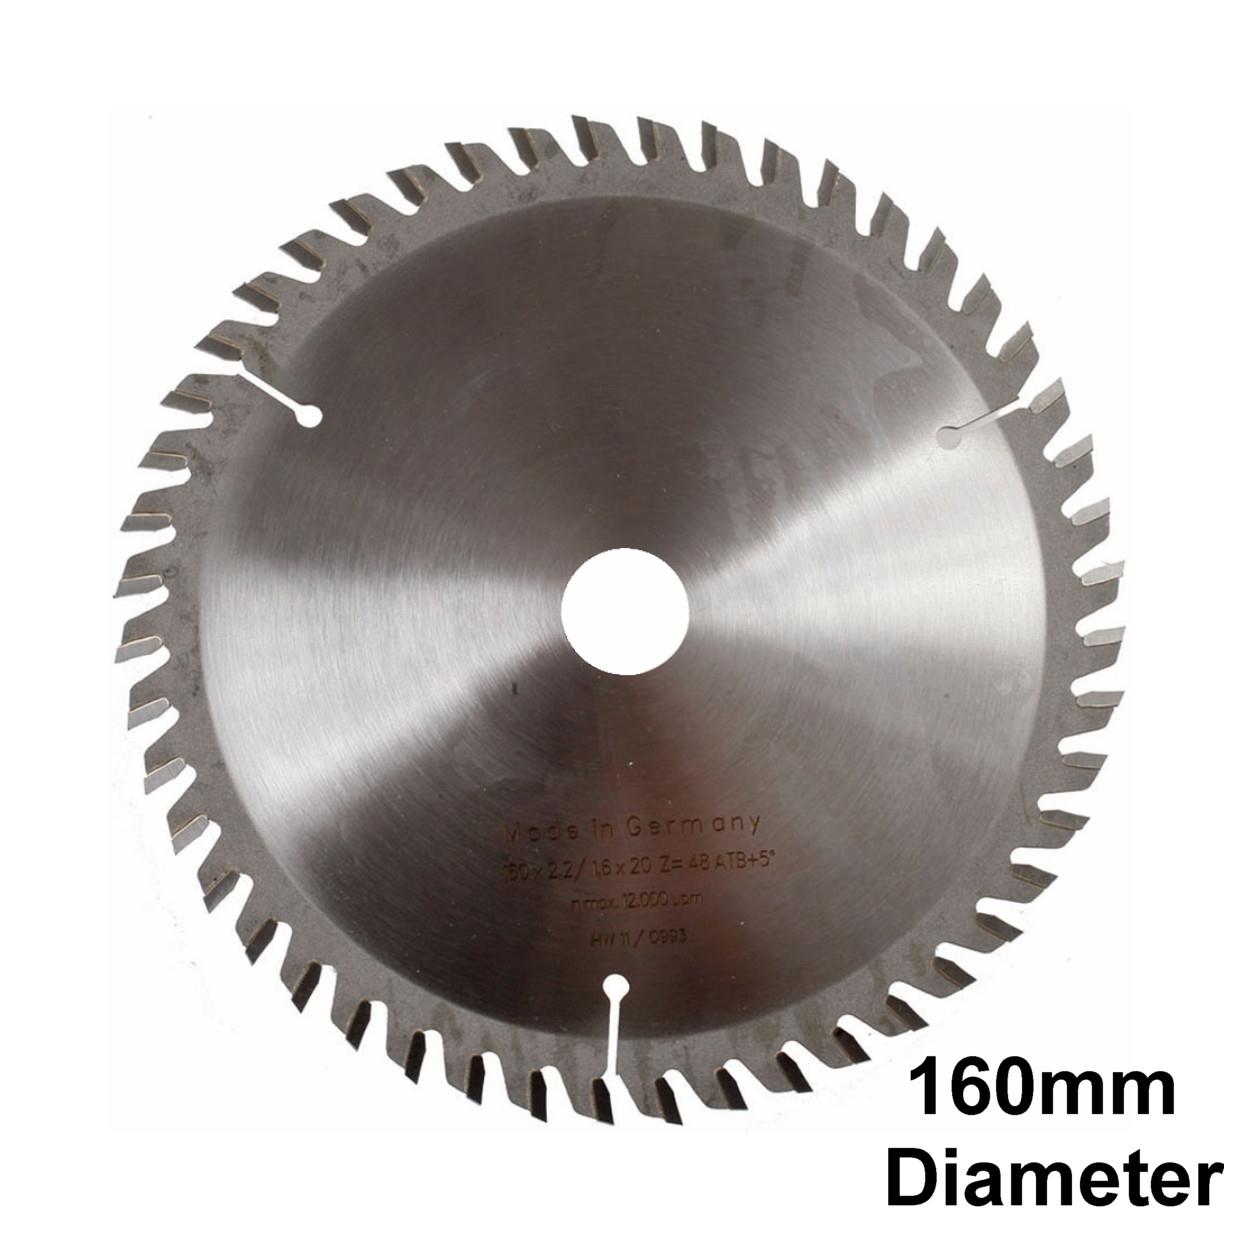 DART PWC1602028 Platinum Circular TCT Wood Cutting Saw Blade; 160mm x 28 Teeth x 20mm